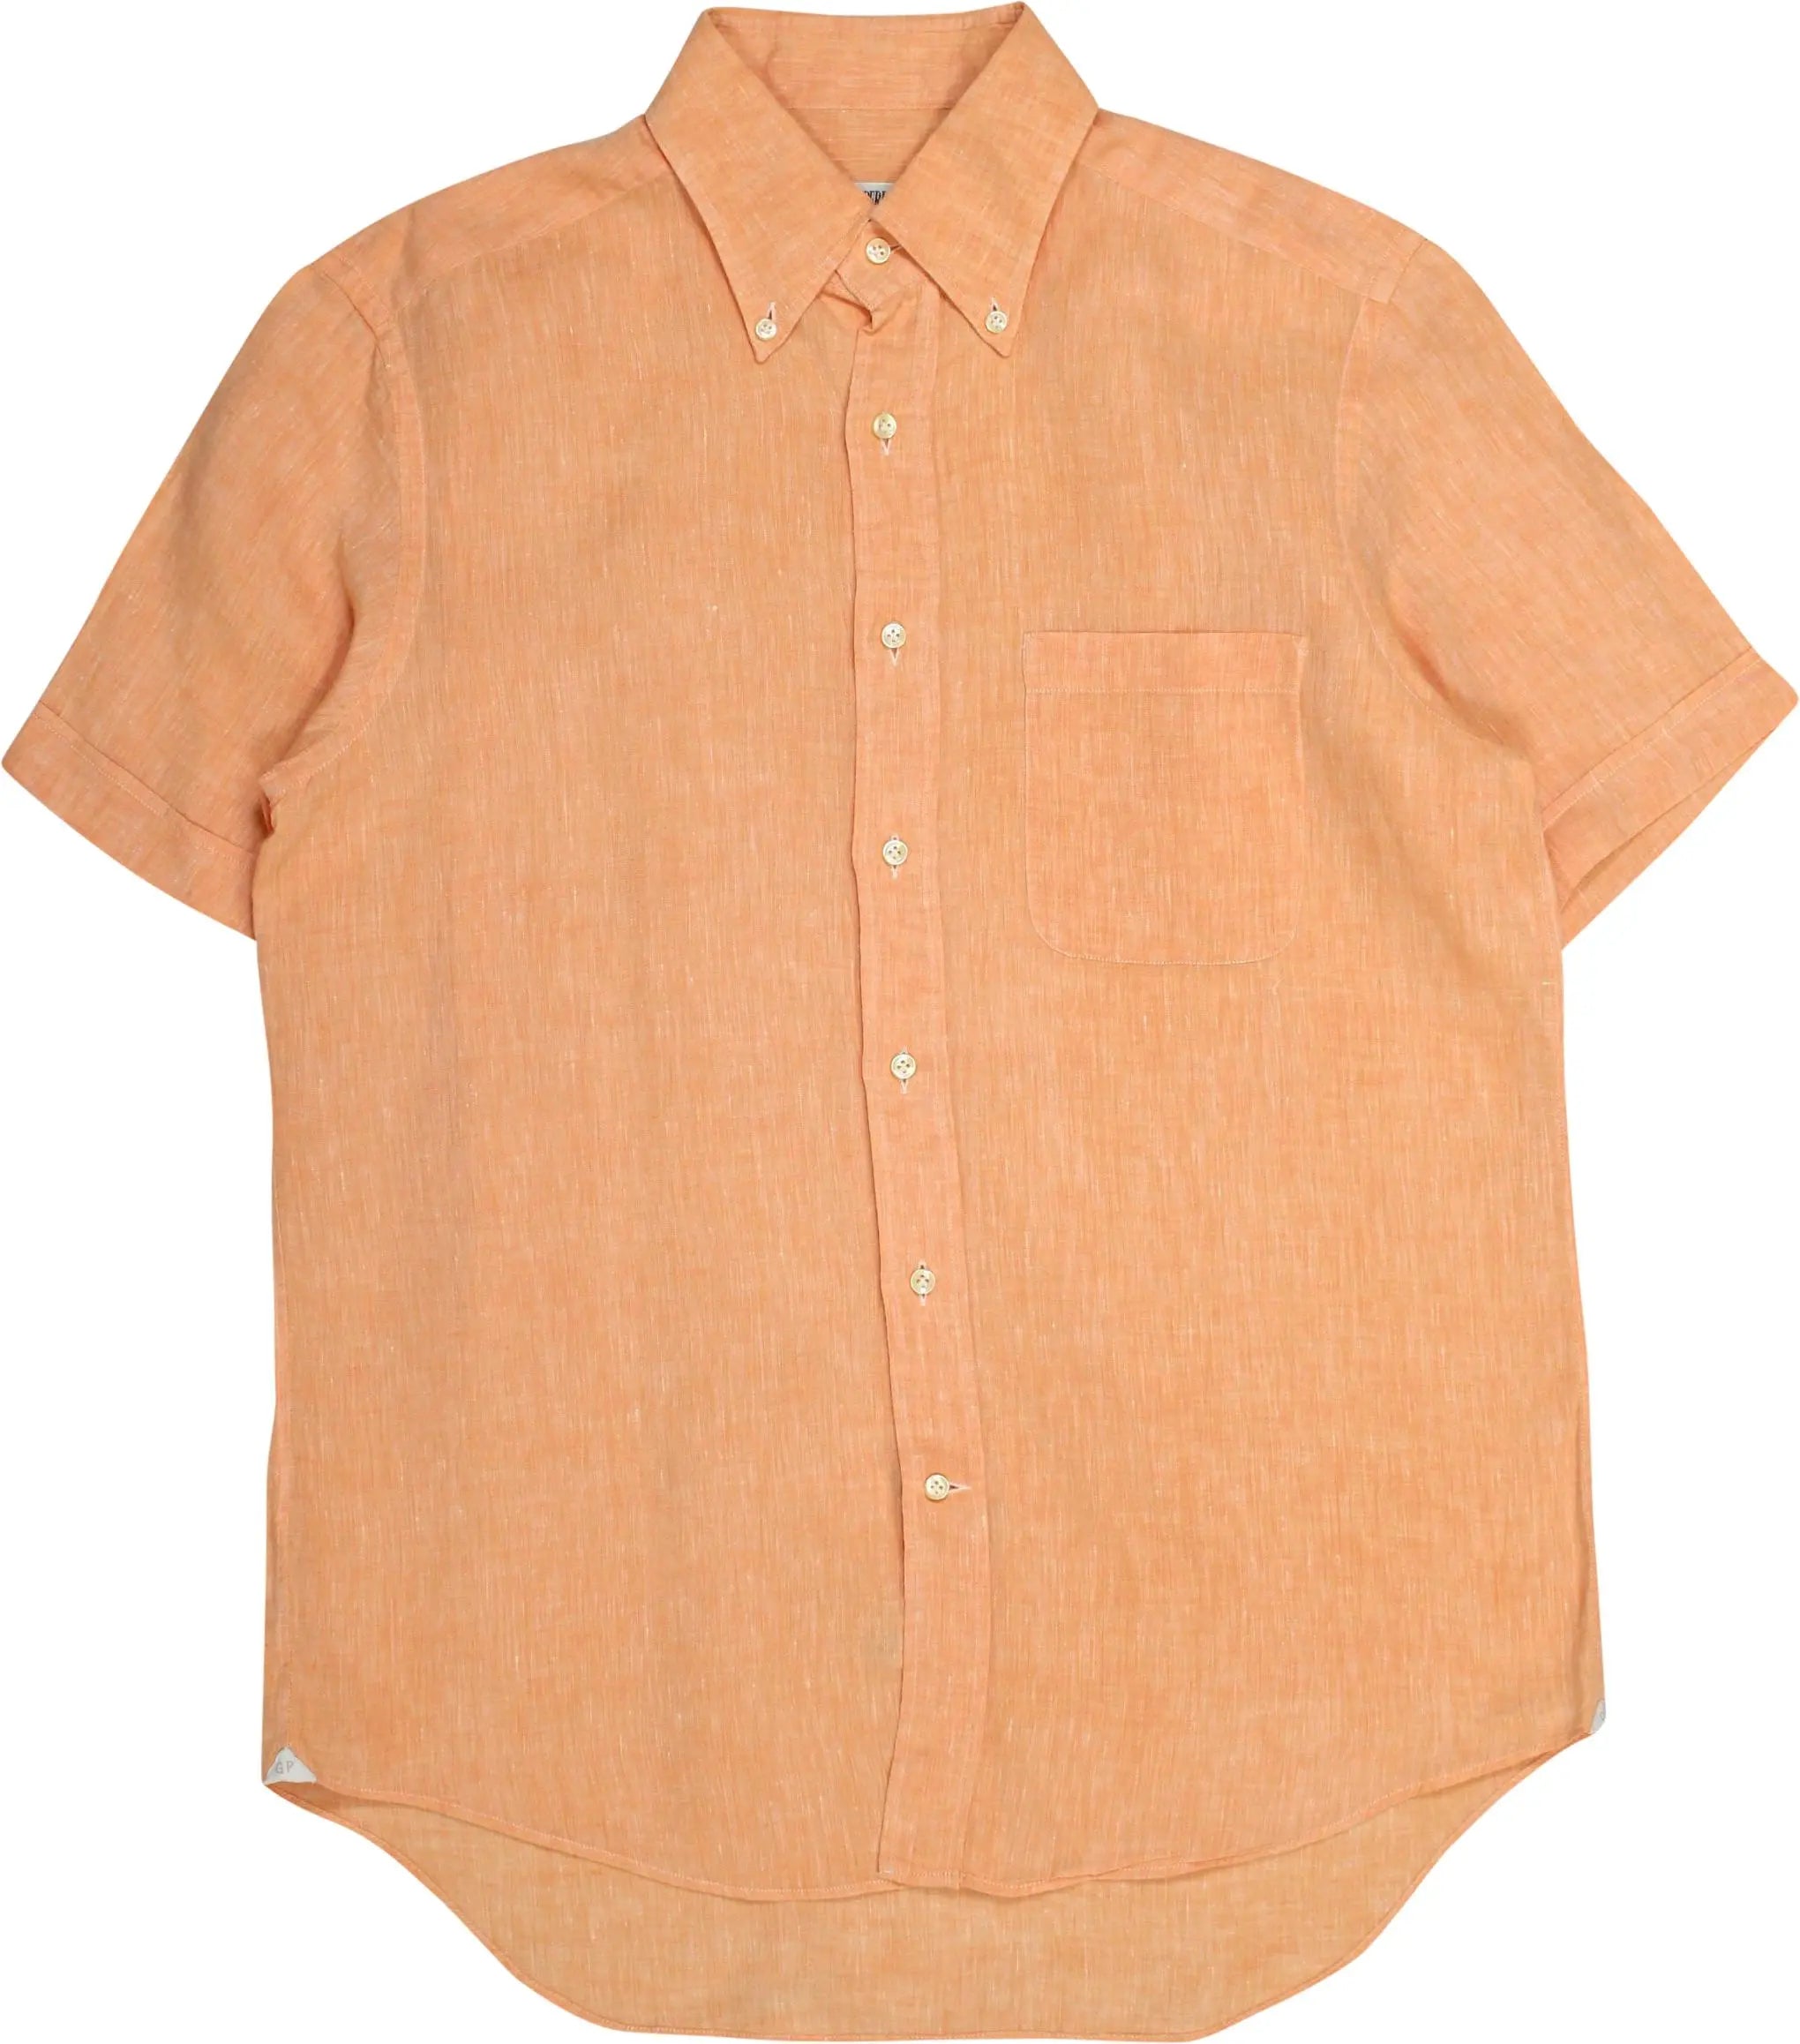 Grigioperla - Linen Short Sleeve Shirt by Grigioperla- ThriftTale.com - Vintage and second handclothing